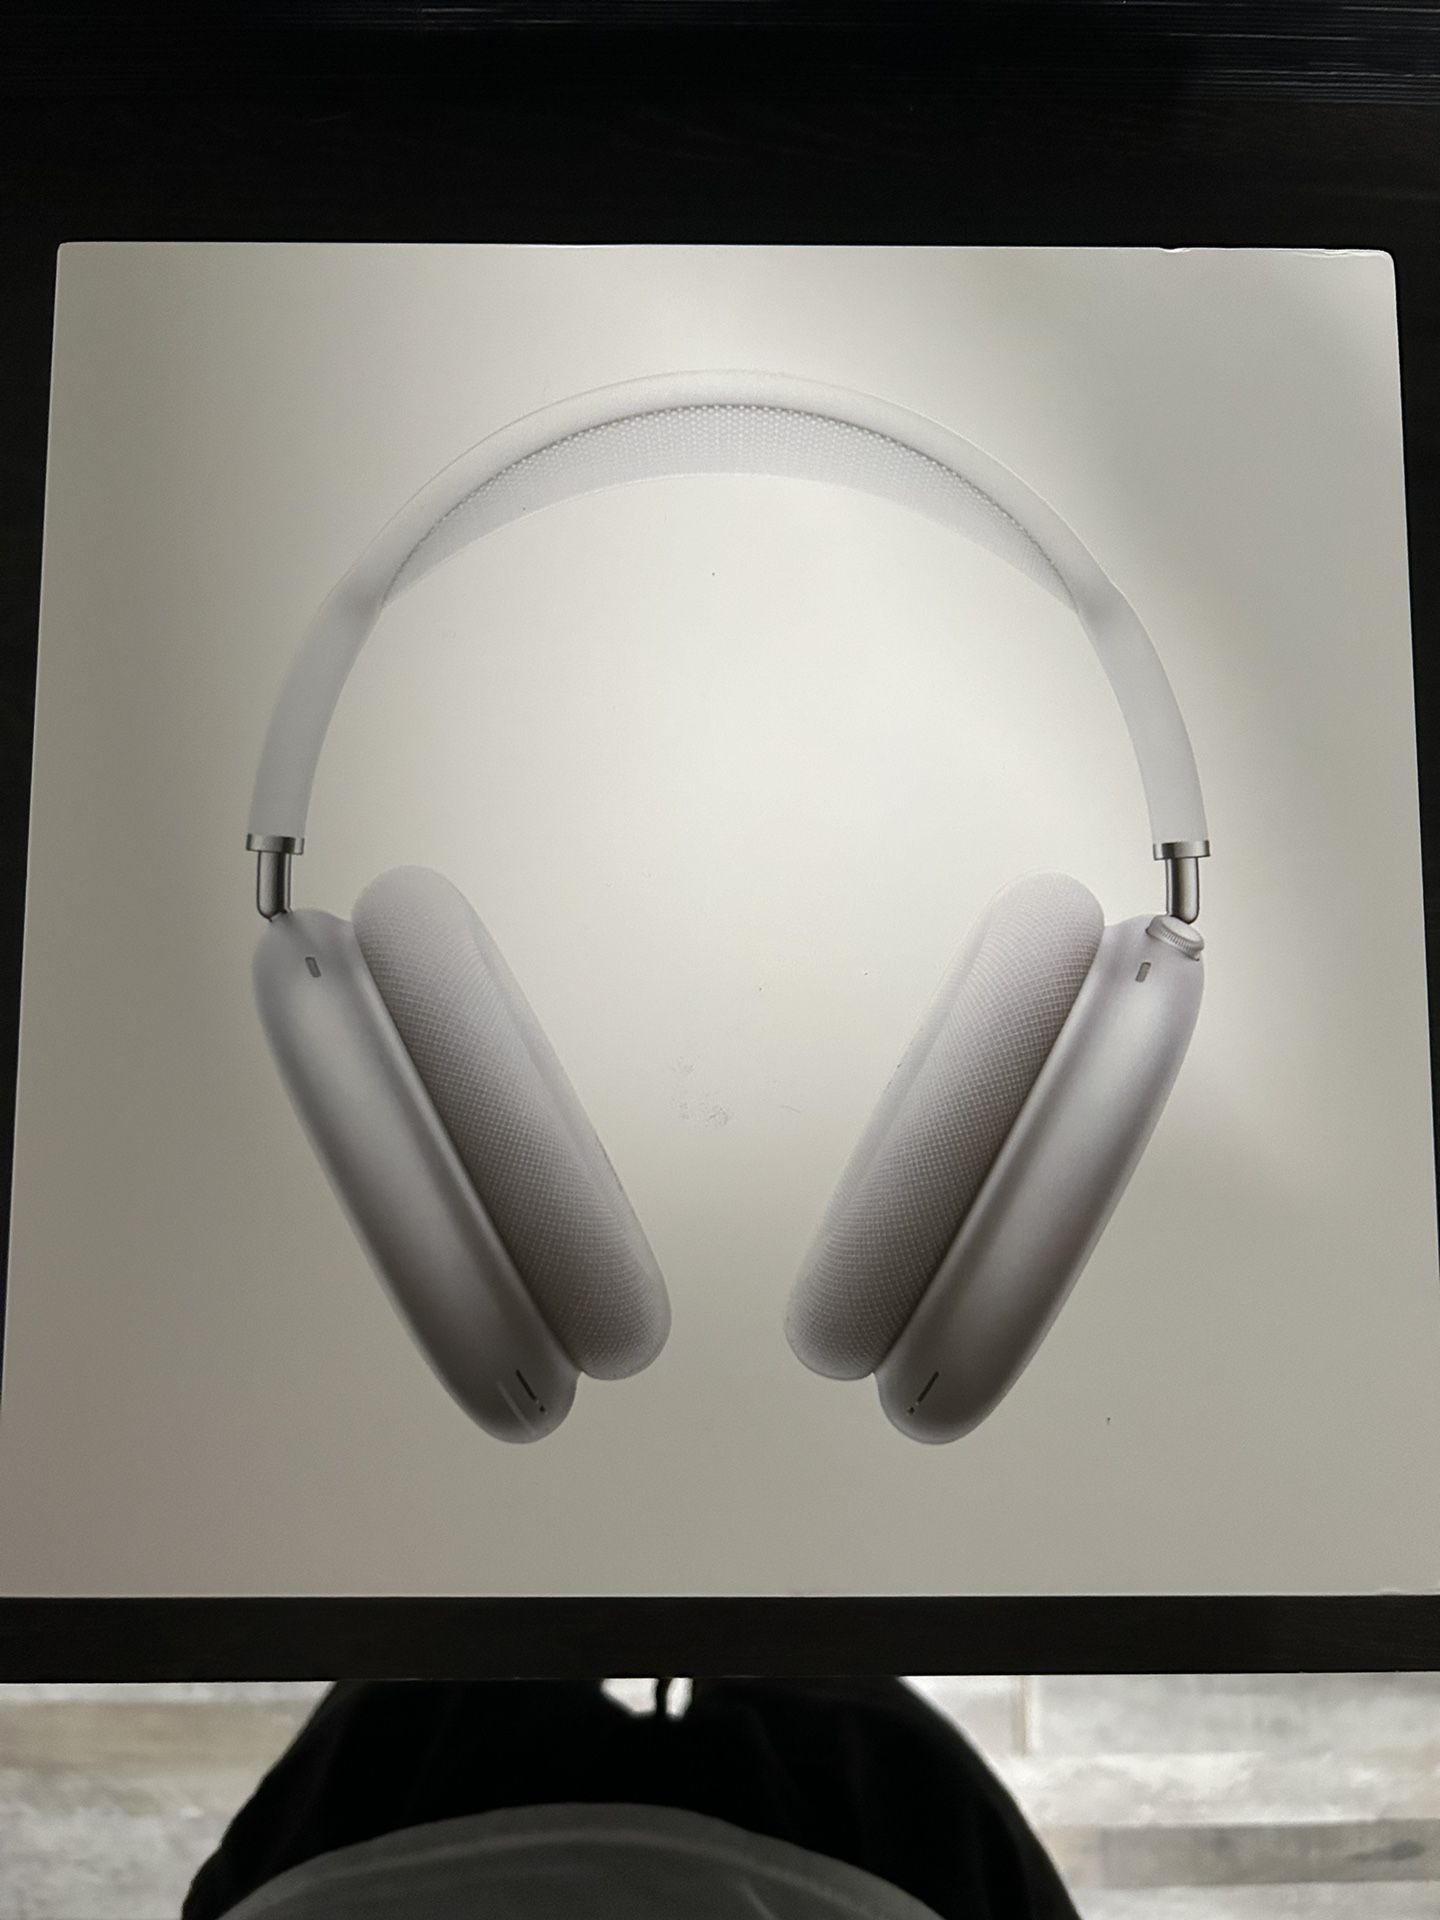 Airpod Max Headphones